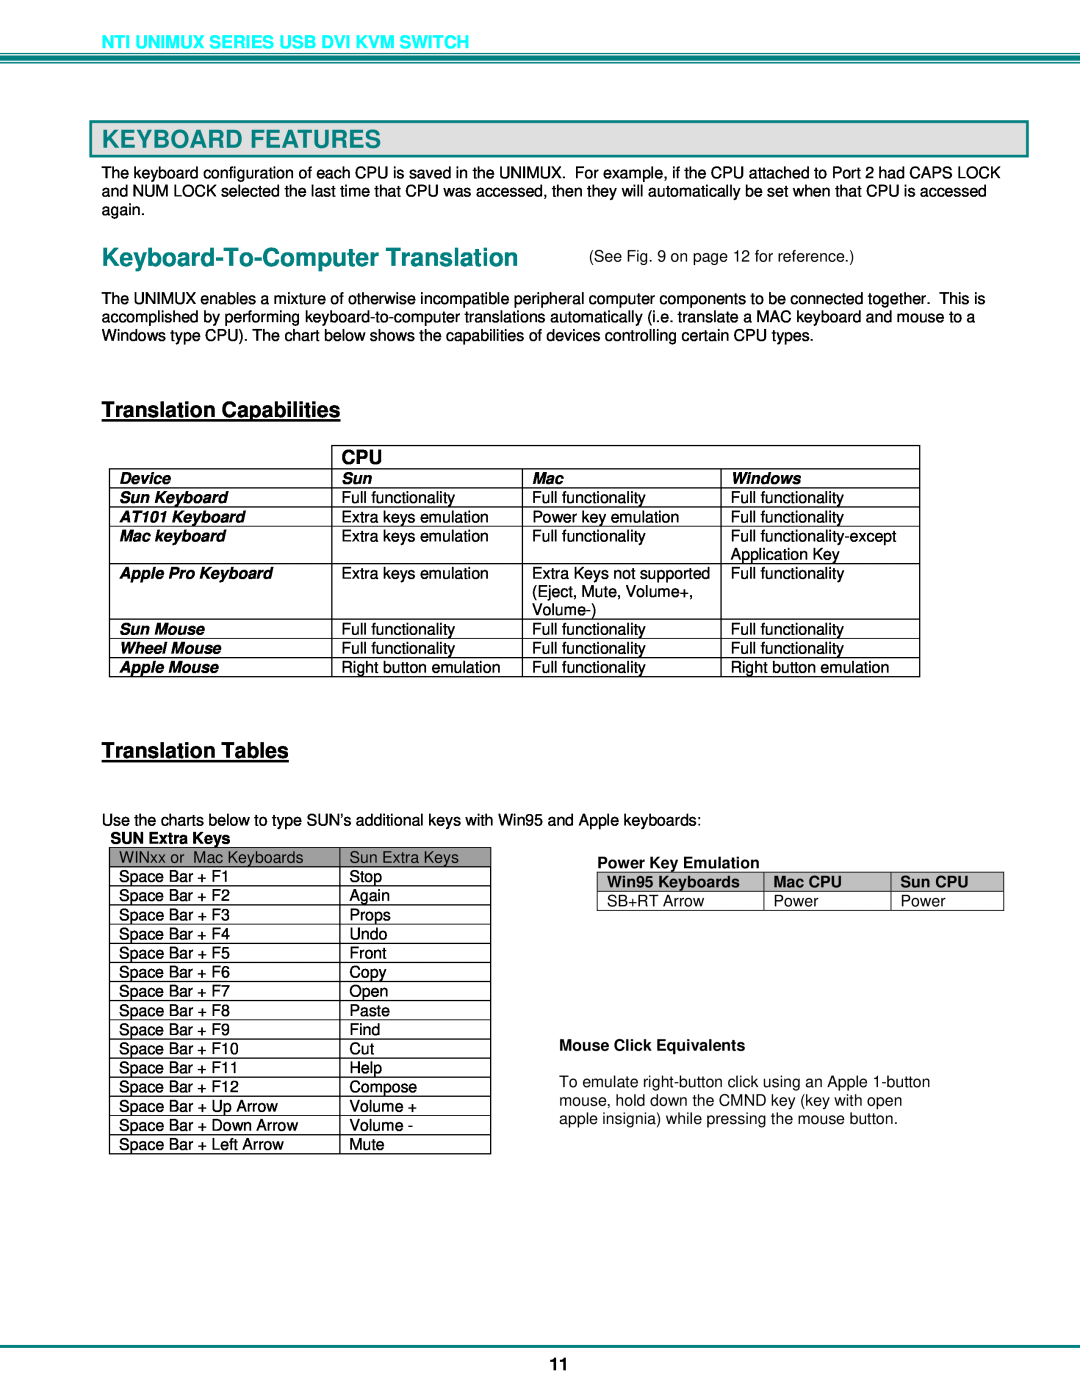 Network Technologies DVI-4 operation manual Keyboard Features, Keyboard-To-Computer Translation, Translation Capabilities 